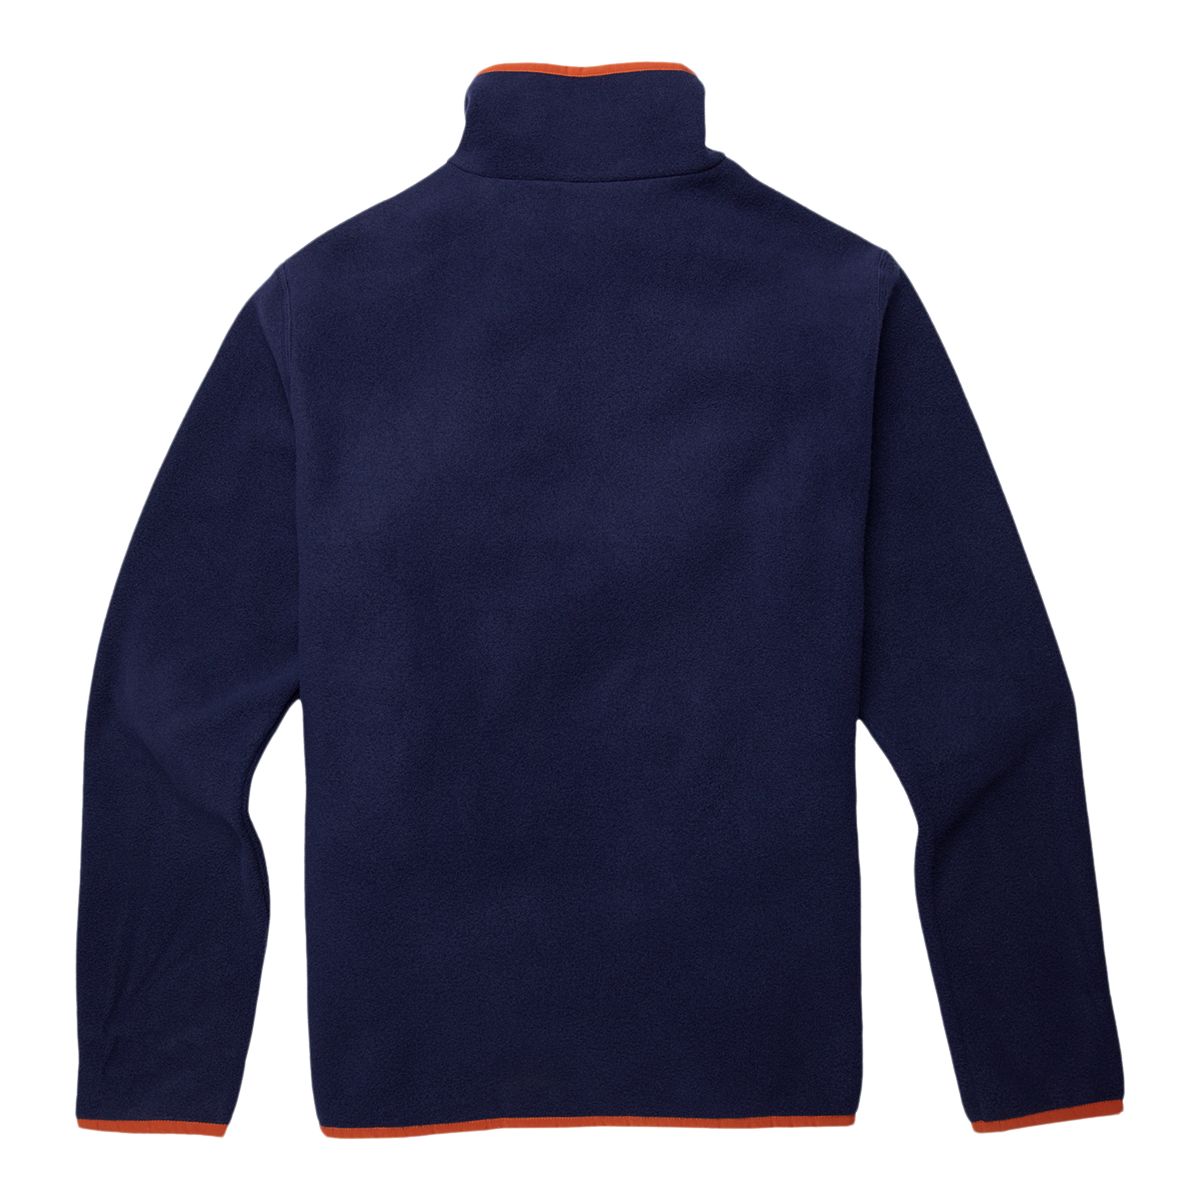 Cotopaxi Men's Teca Fleece Pullover Jacket